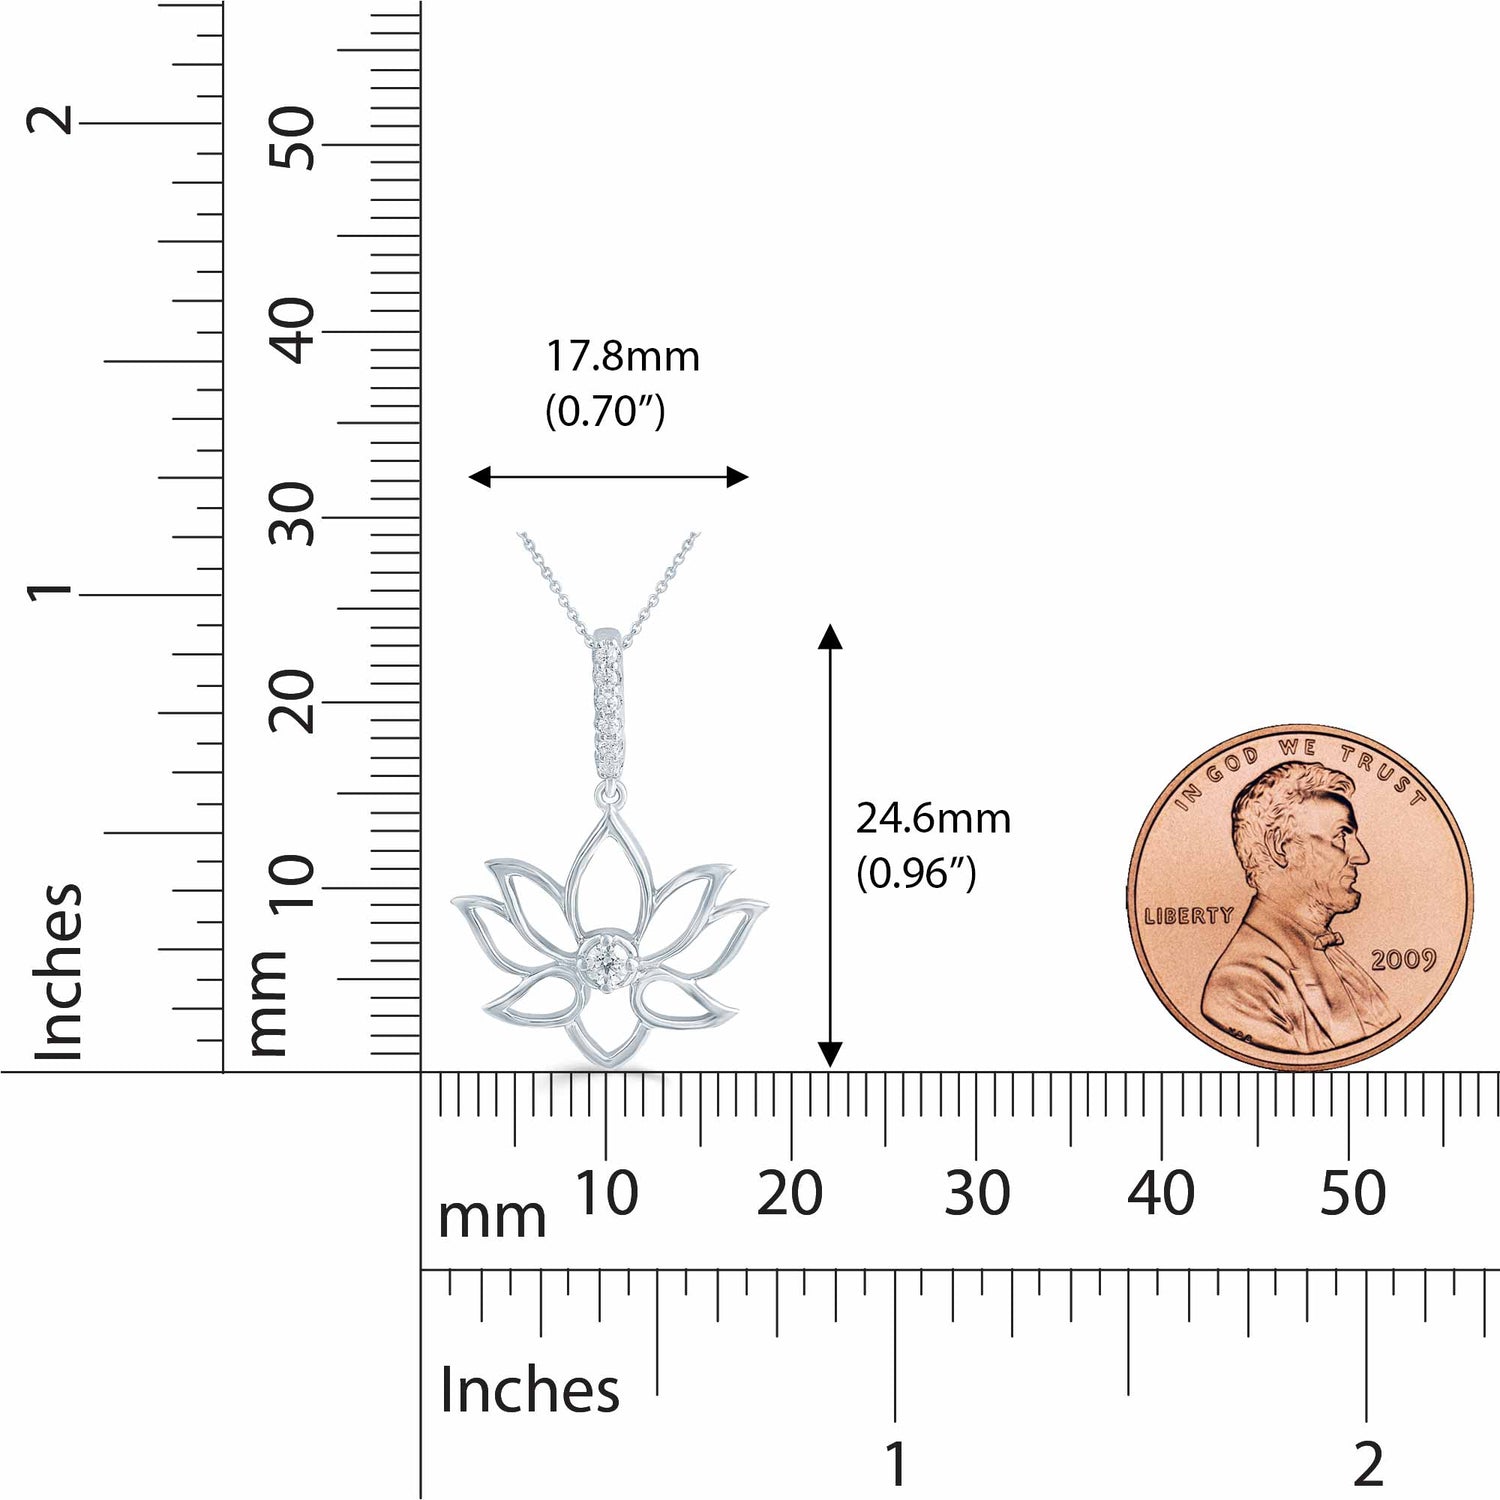 1/10 CT TW Diamond Lotus Flower Pendant in Sterling Silver